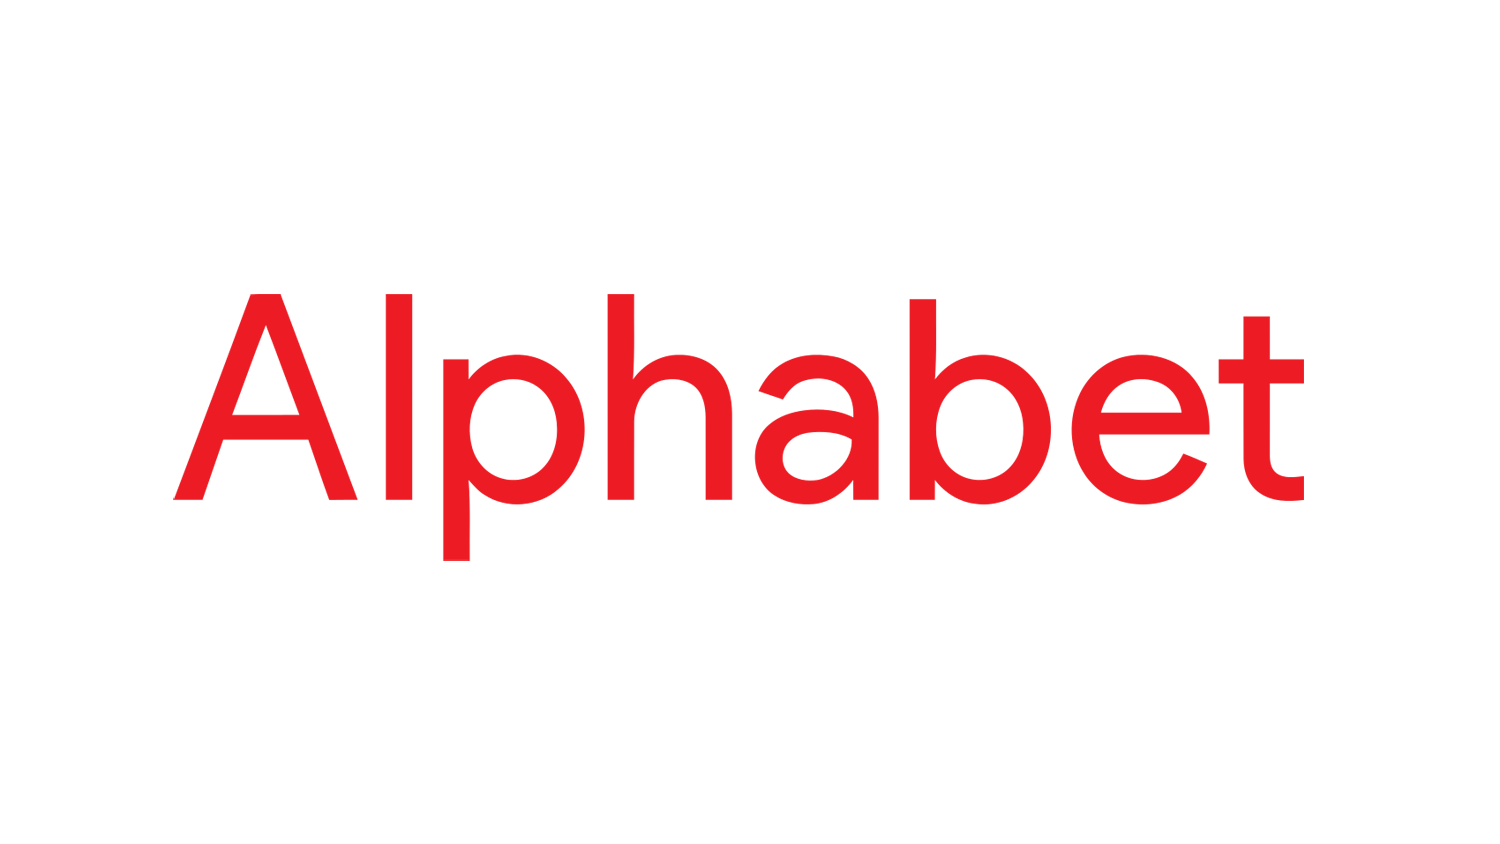 A New Company Called Alphabet